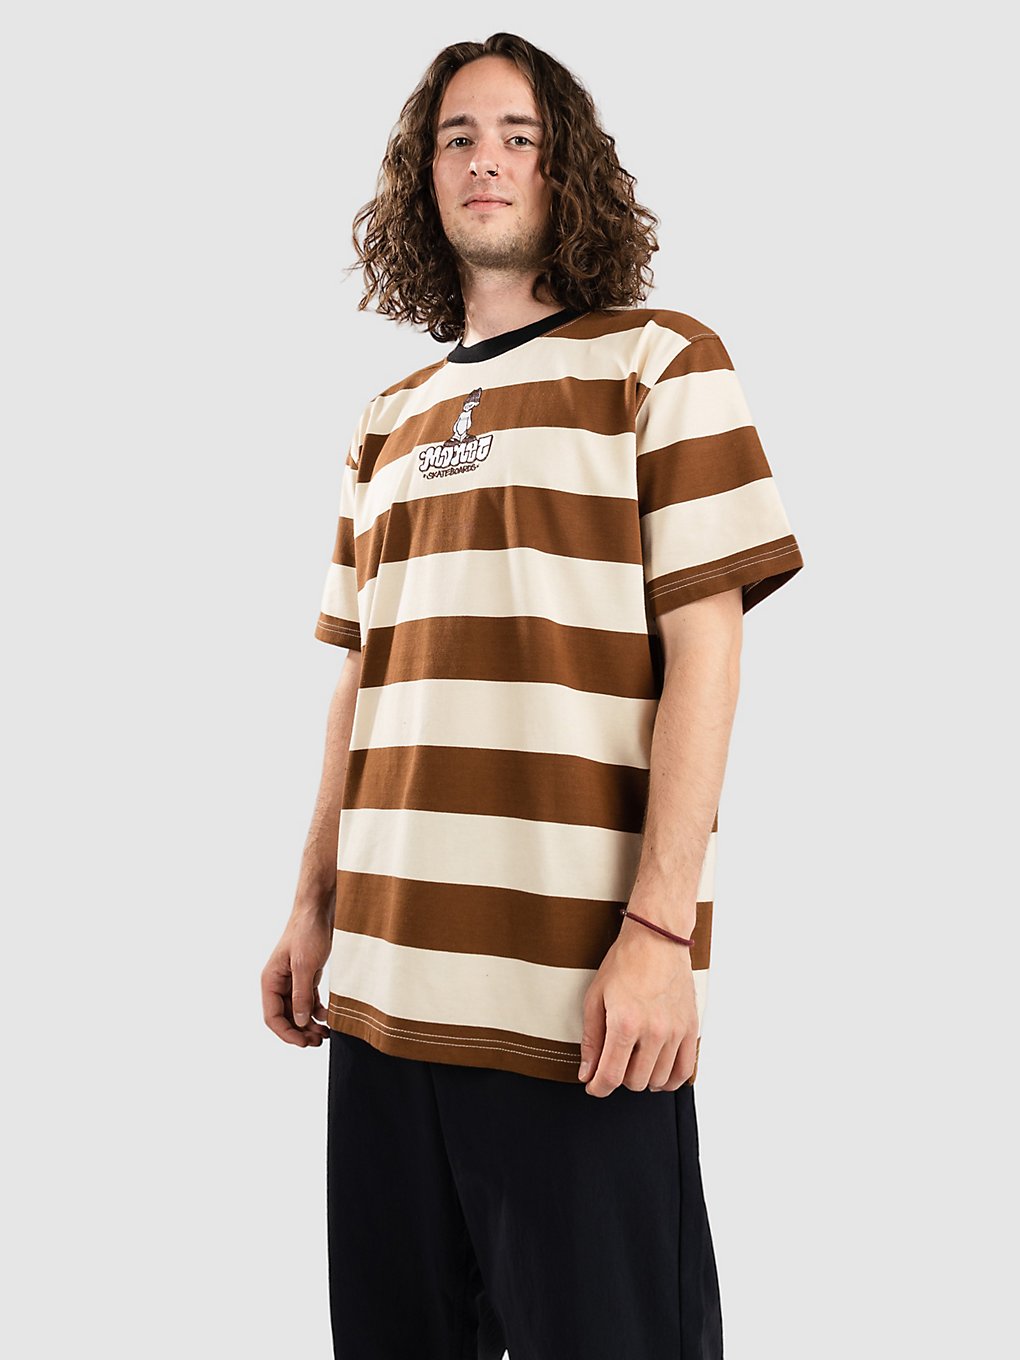 Monet Skateboards Grom T-Shirt brown kaufen